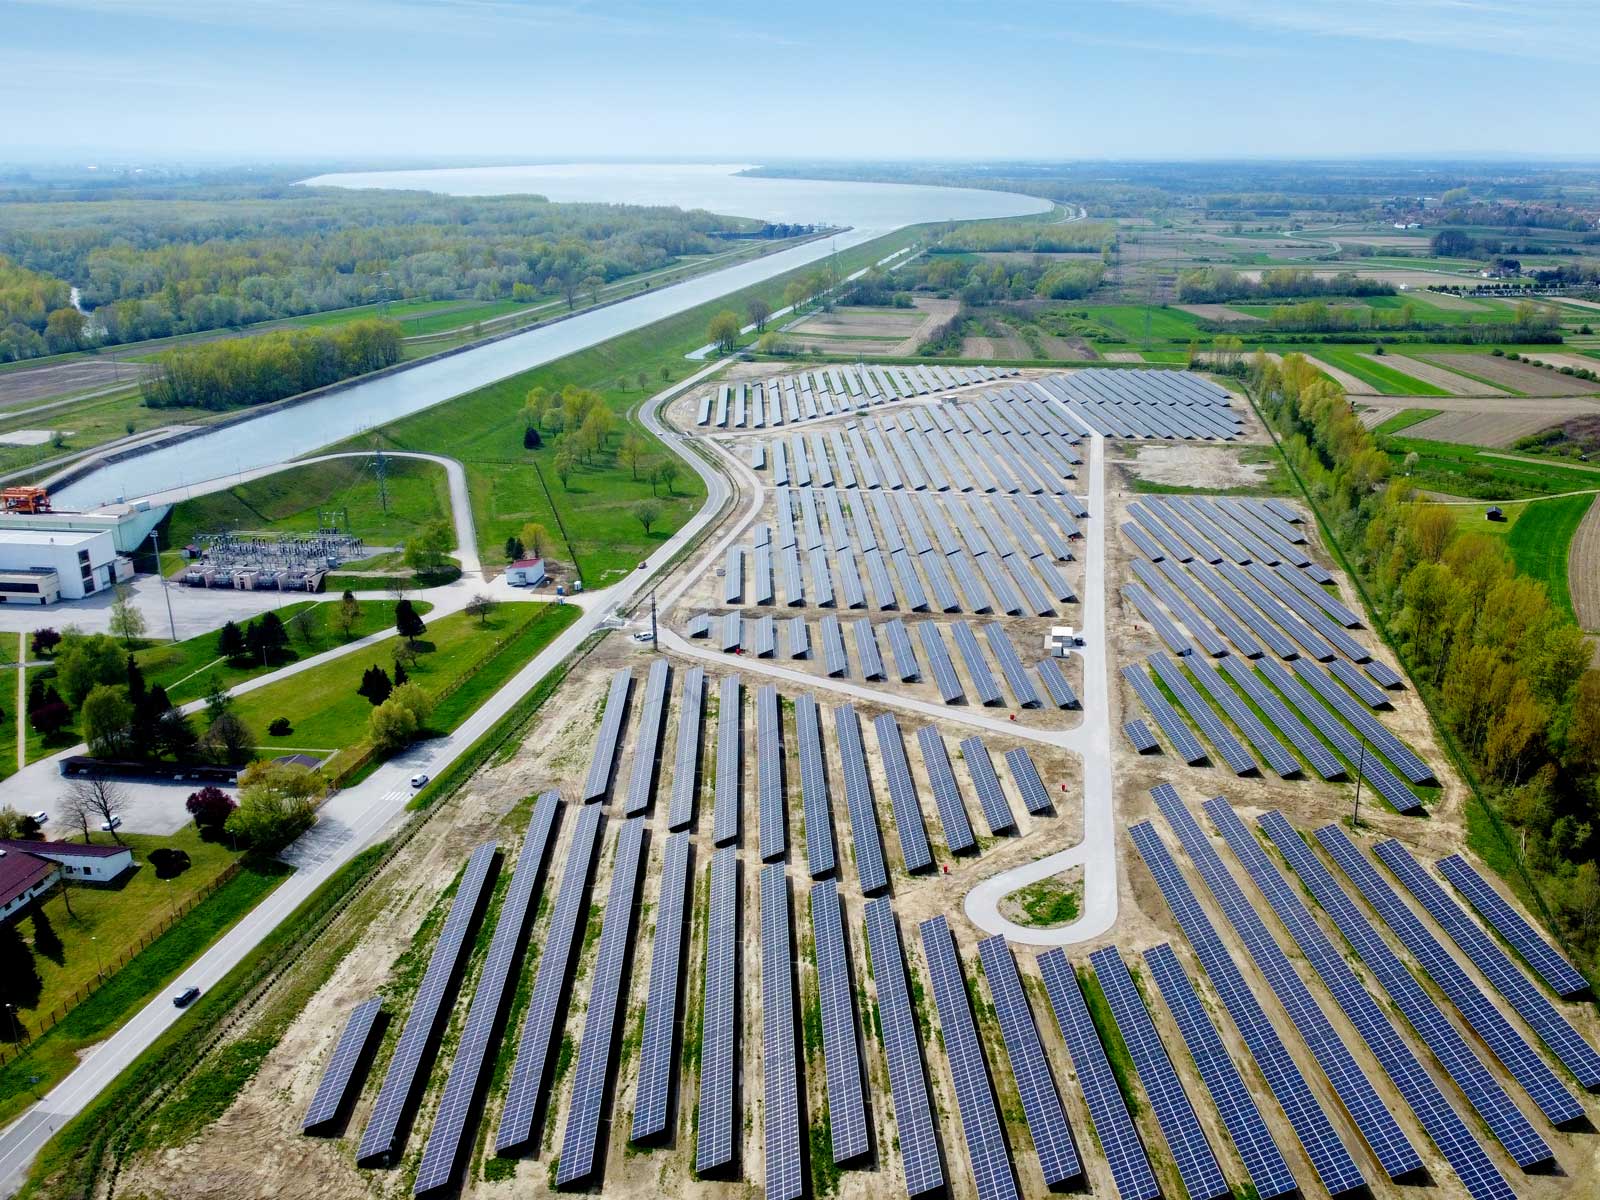 The largest solar power plant in Croatia, Donja Dubrava SPP